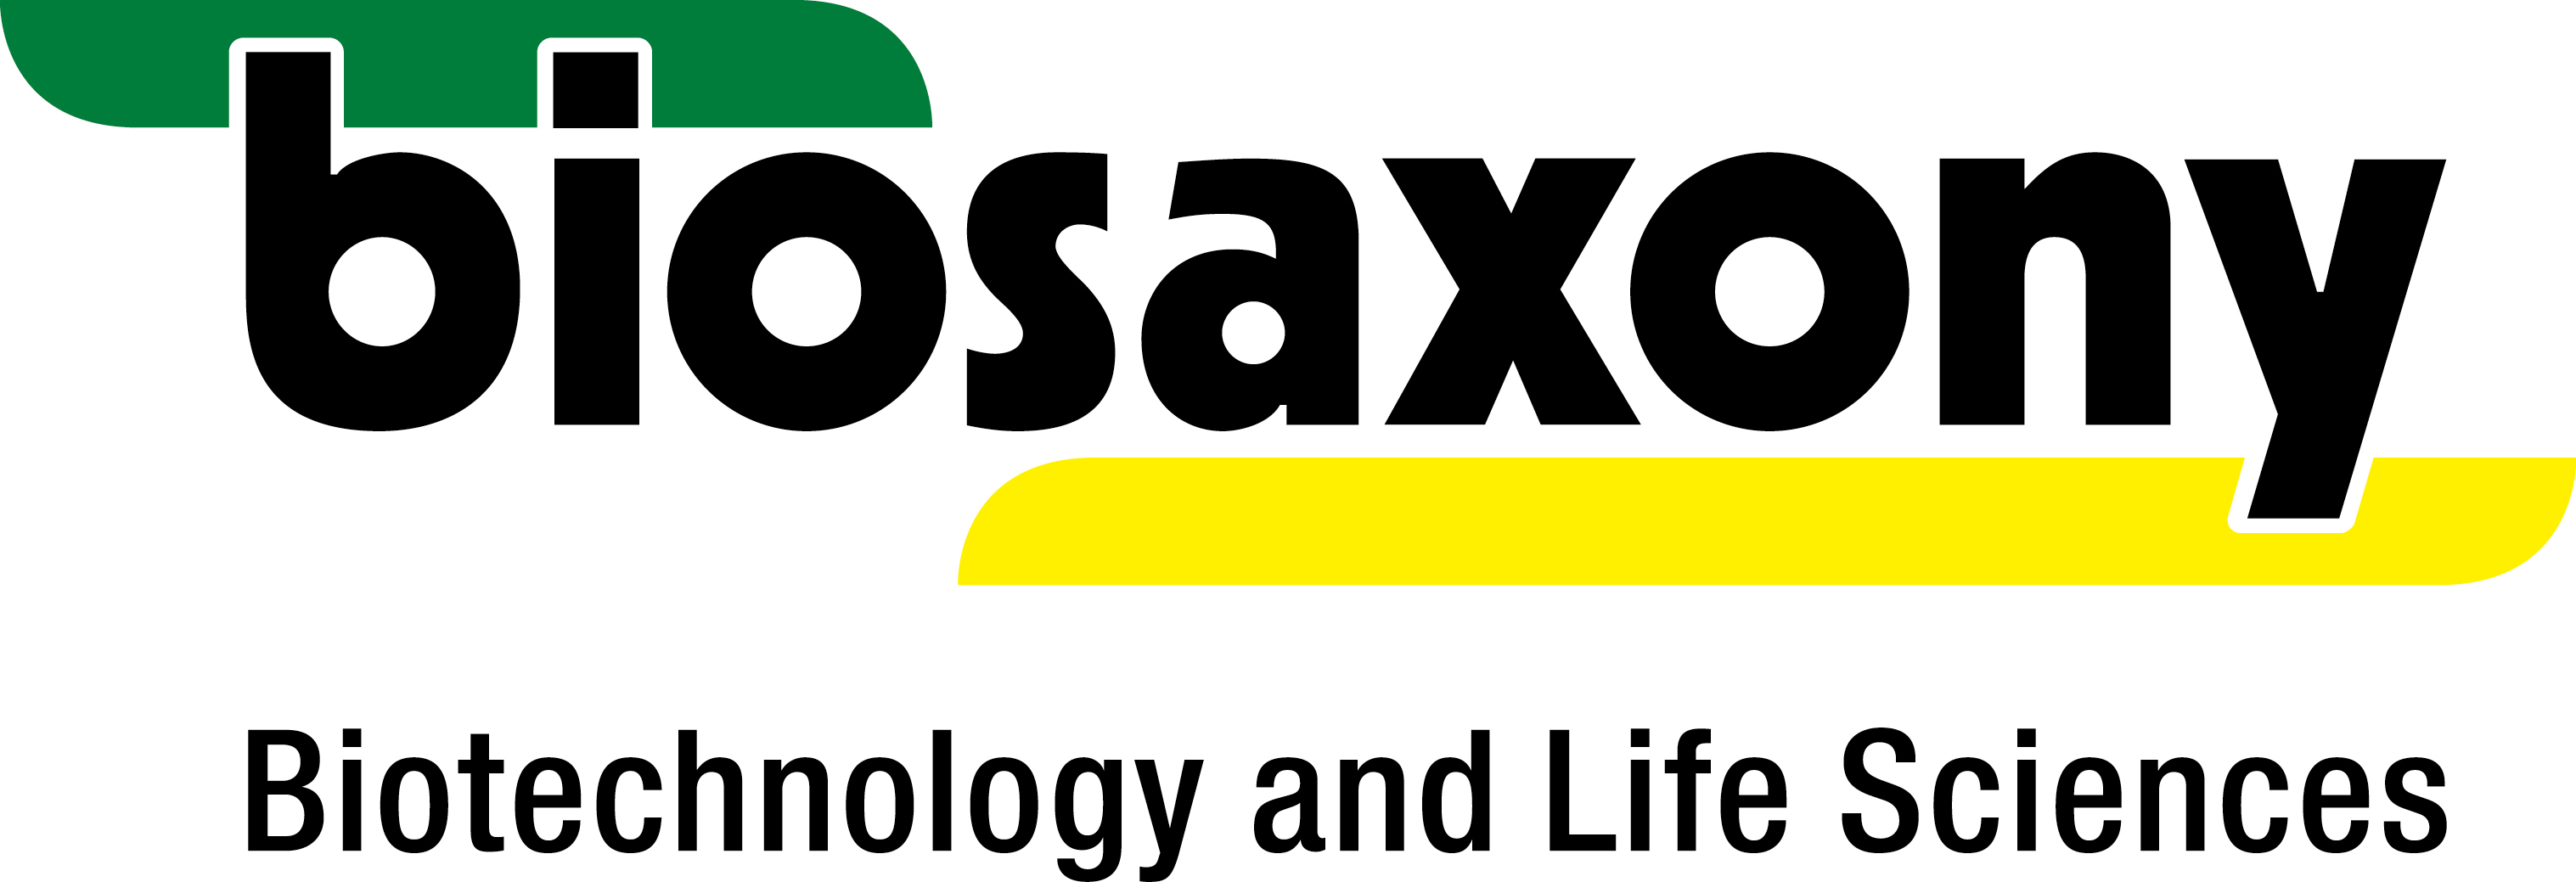 Biosaxony Biotechnology